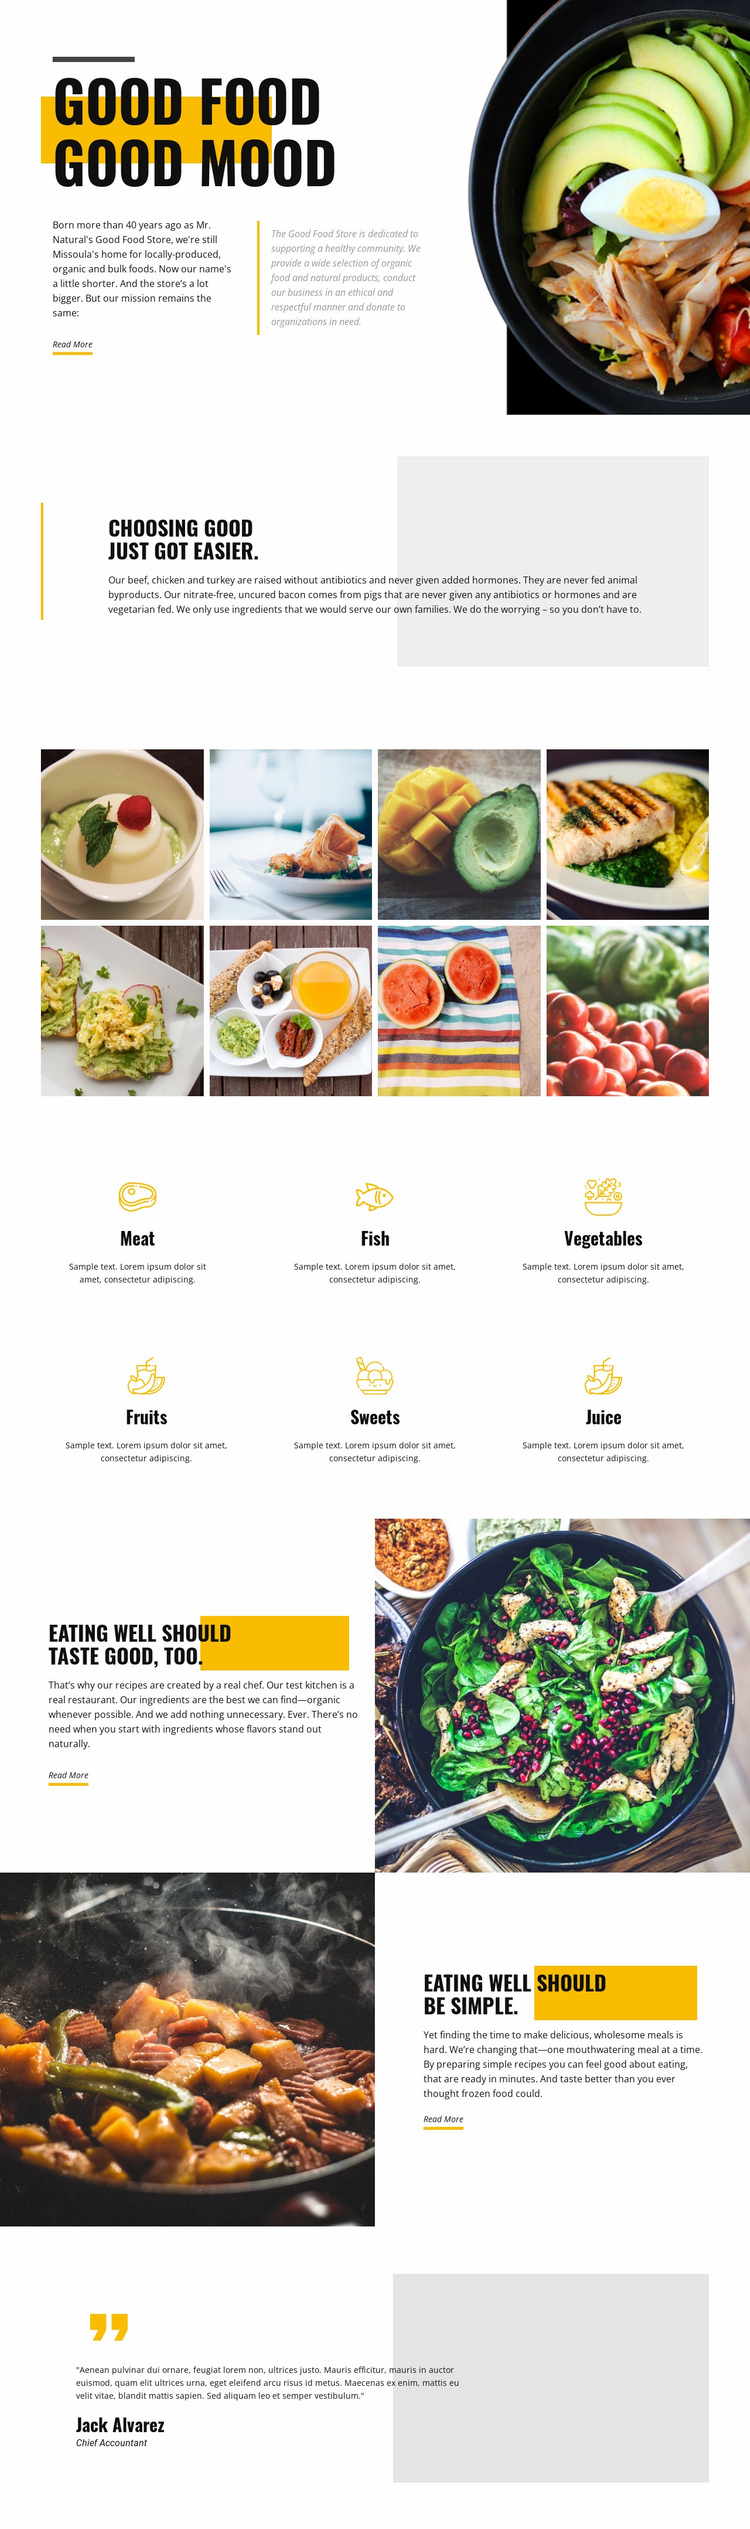 Good mood good food Website Design